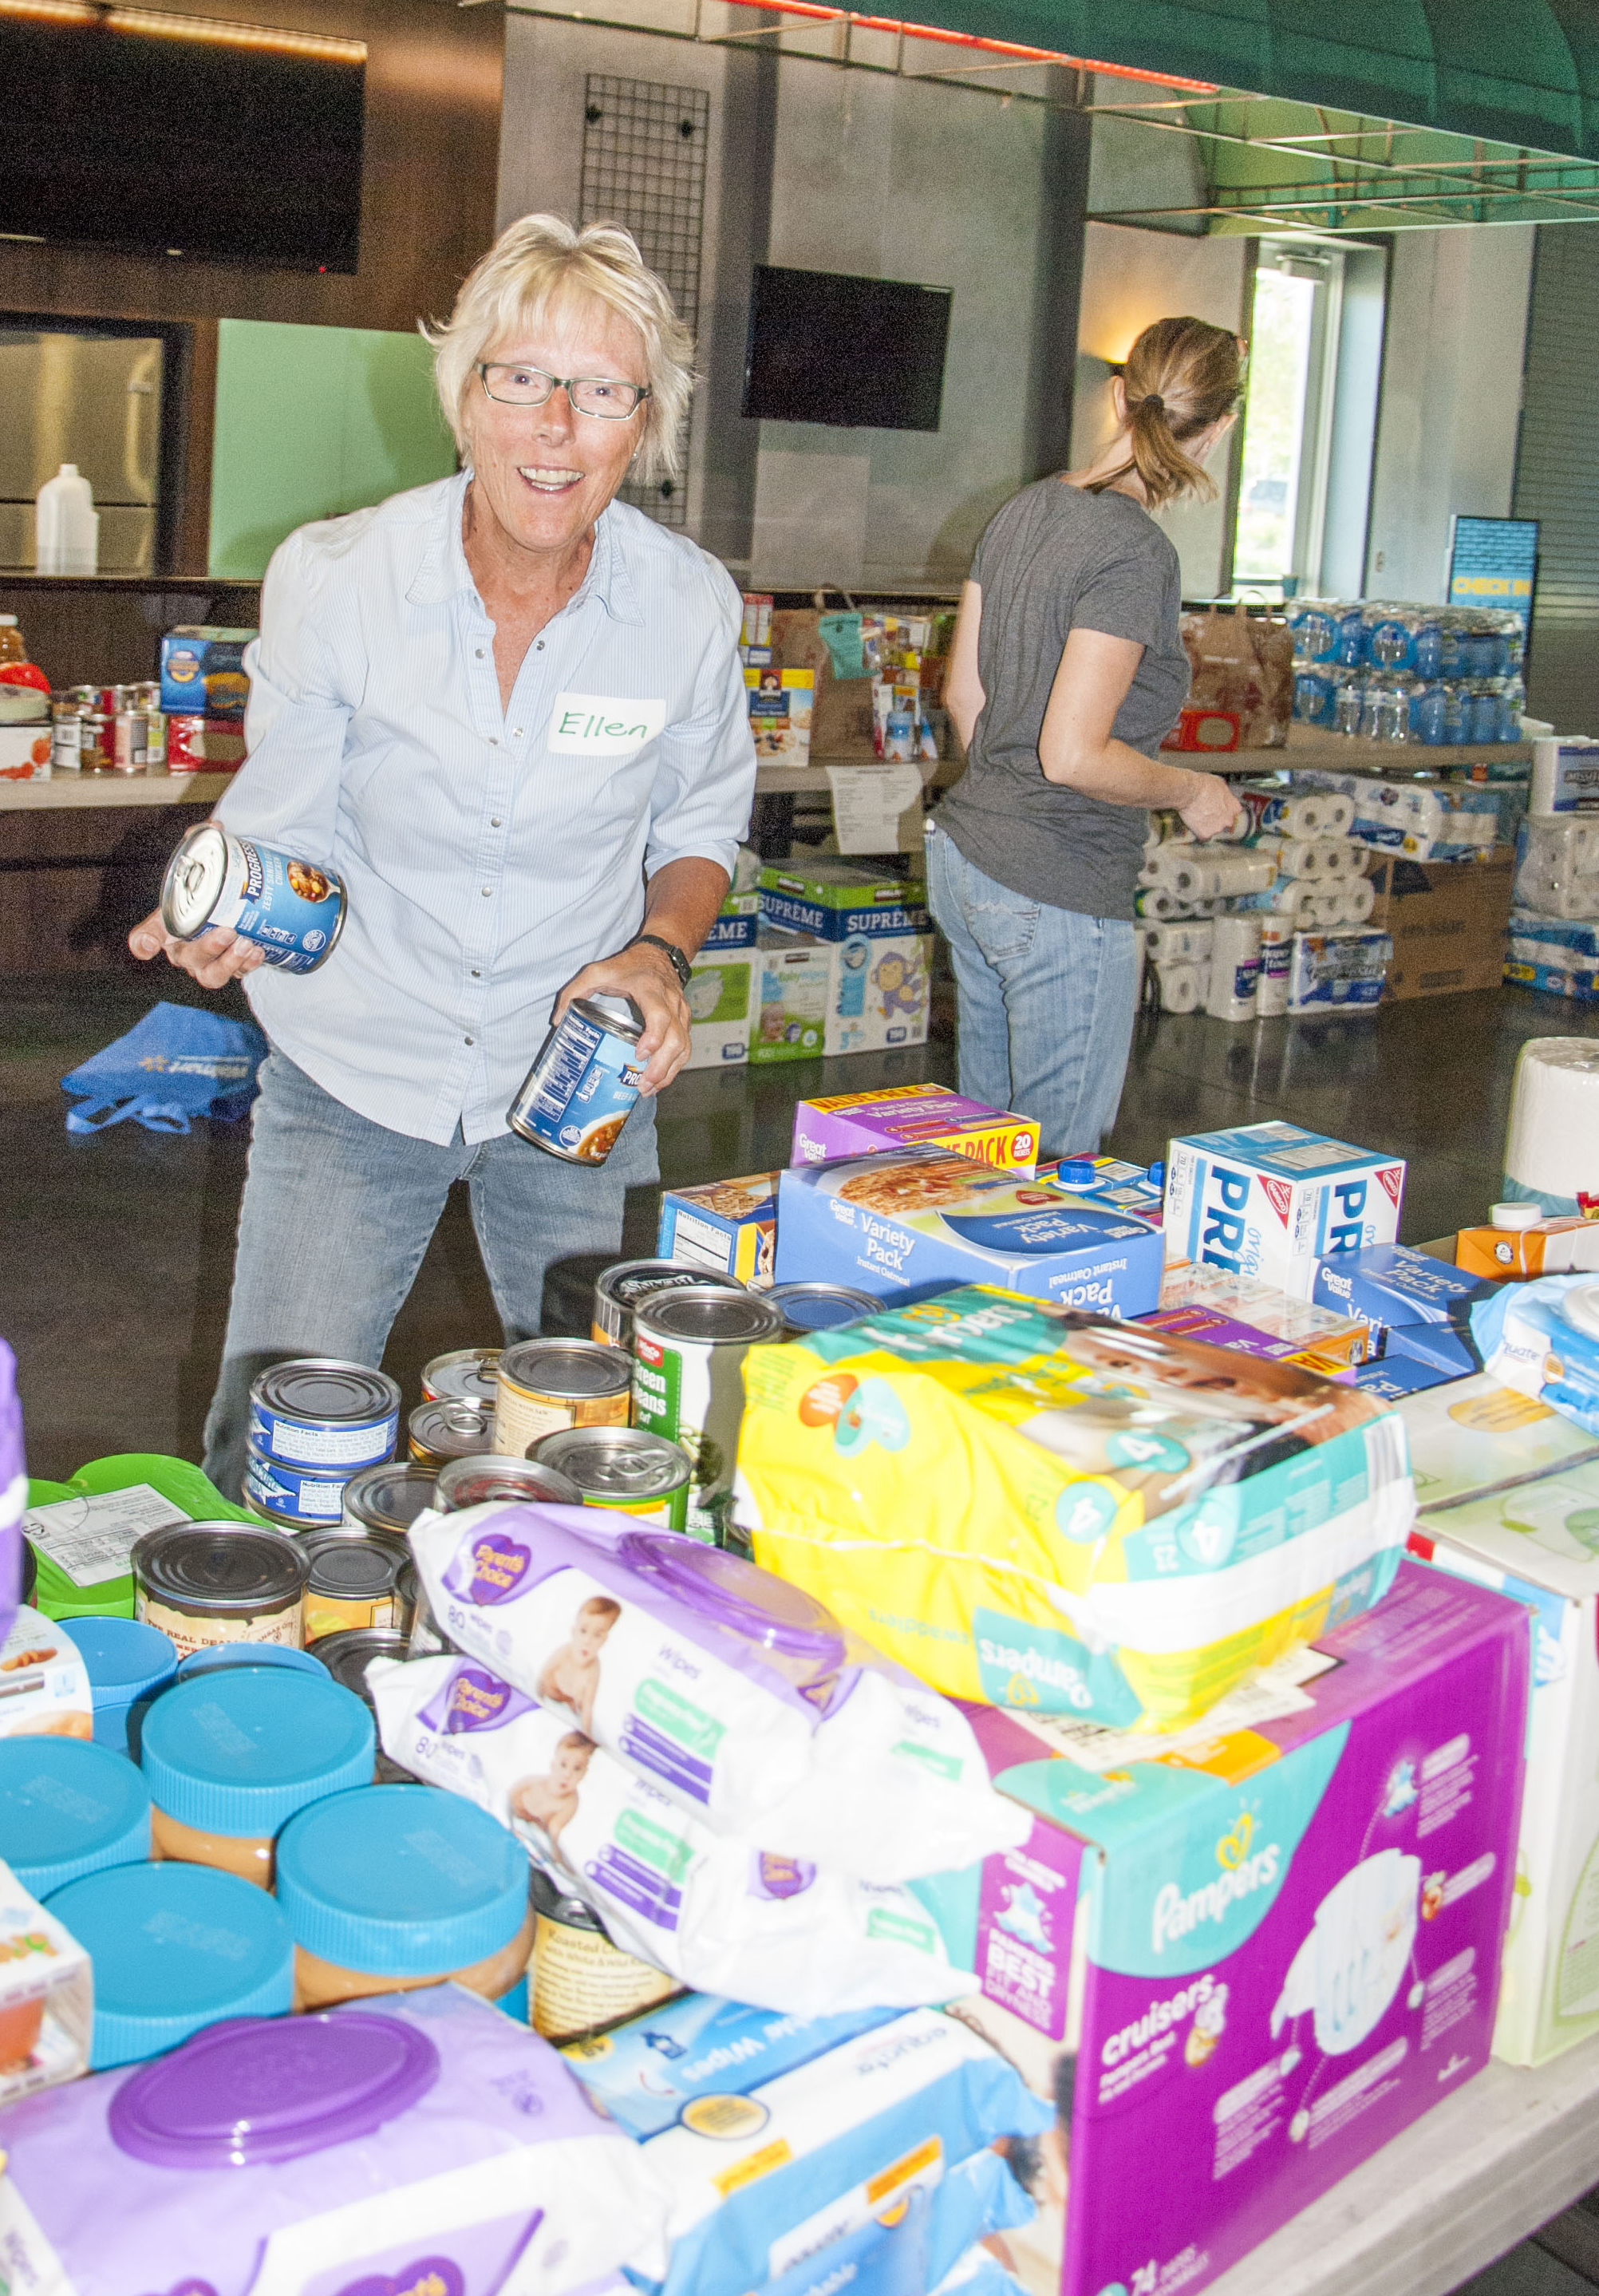 Volunteer at The San Diego Food Bank - Vista or Miramar Locations